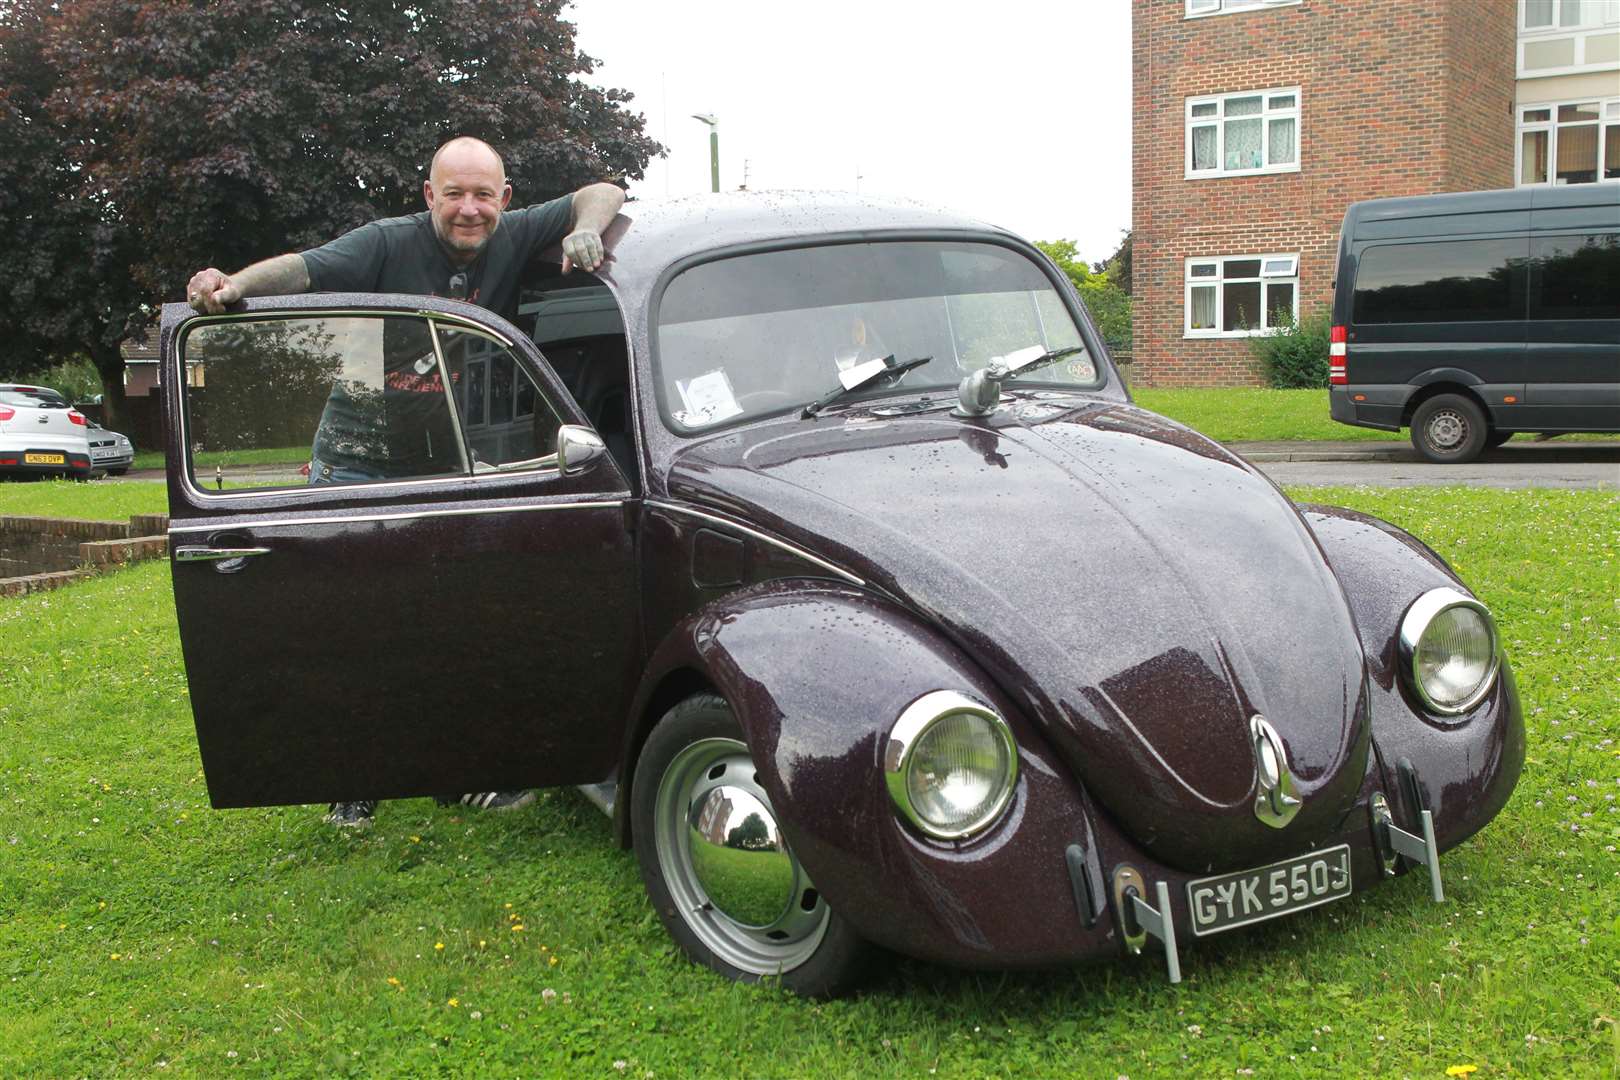 Chris Bramwell with his rebuilt VW Beetle called Firebug